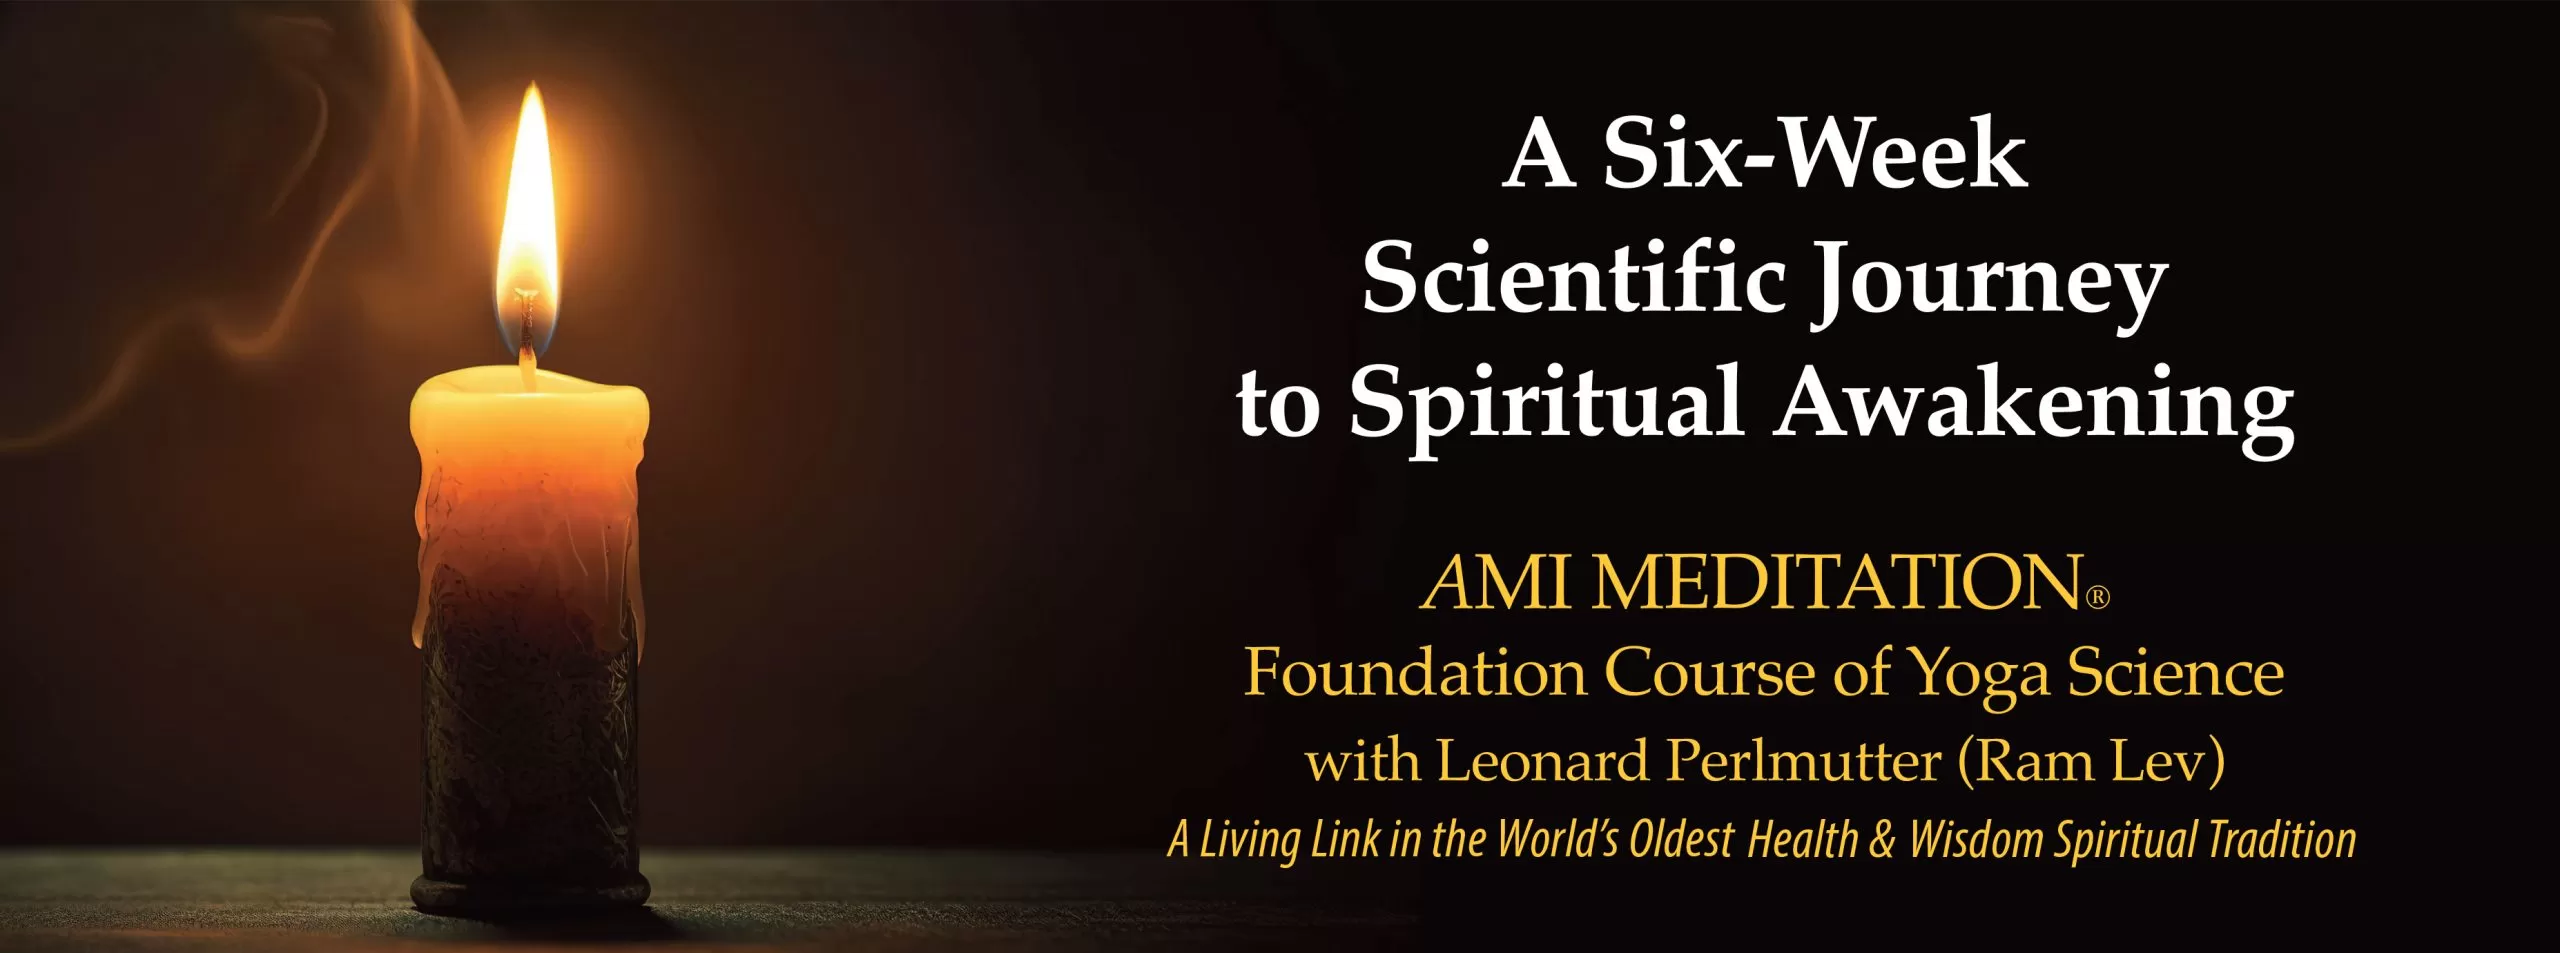 AMI Meditation - A Six-Week Scientific Journey to Spiritual Awakening